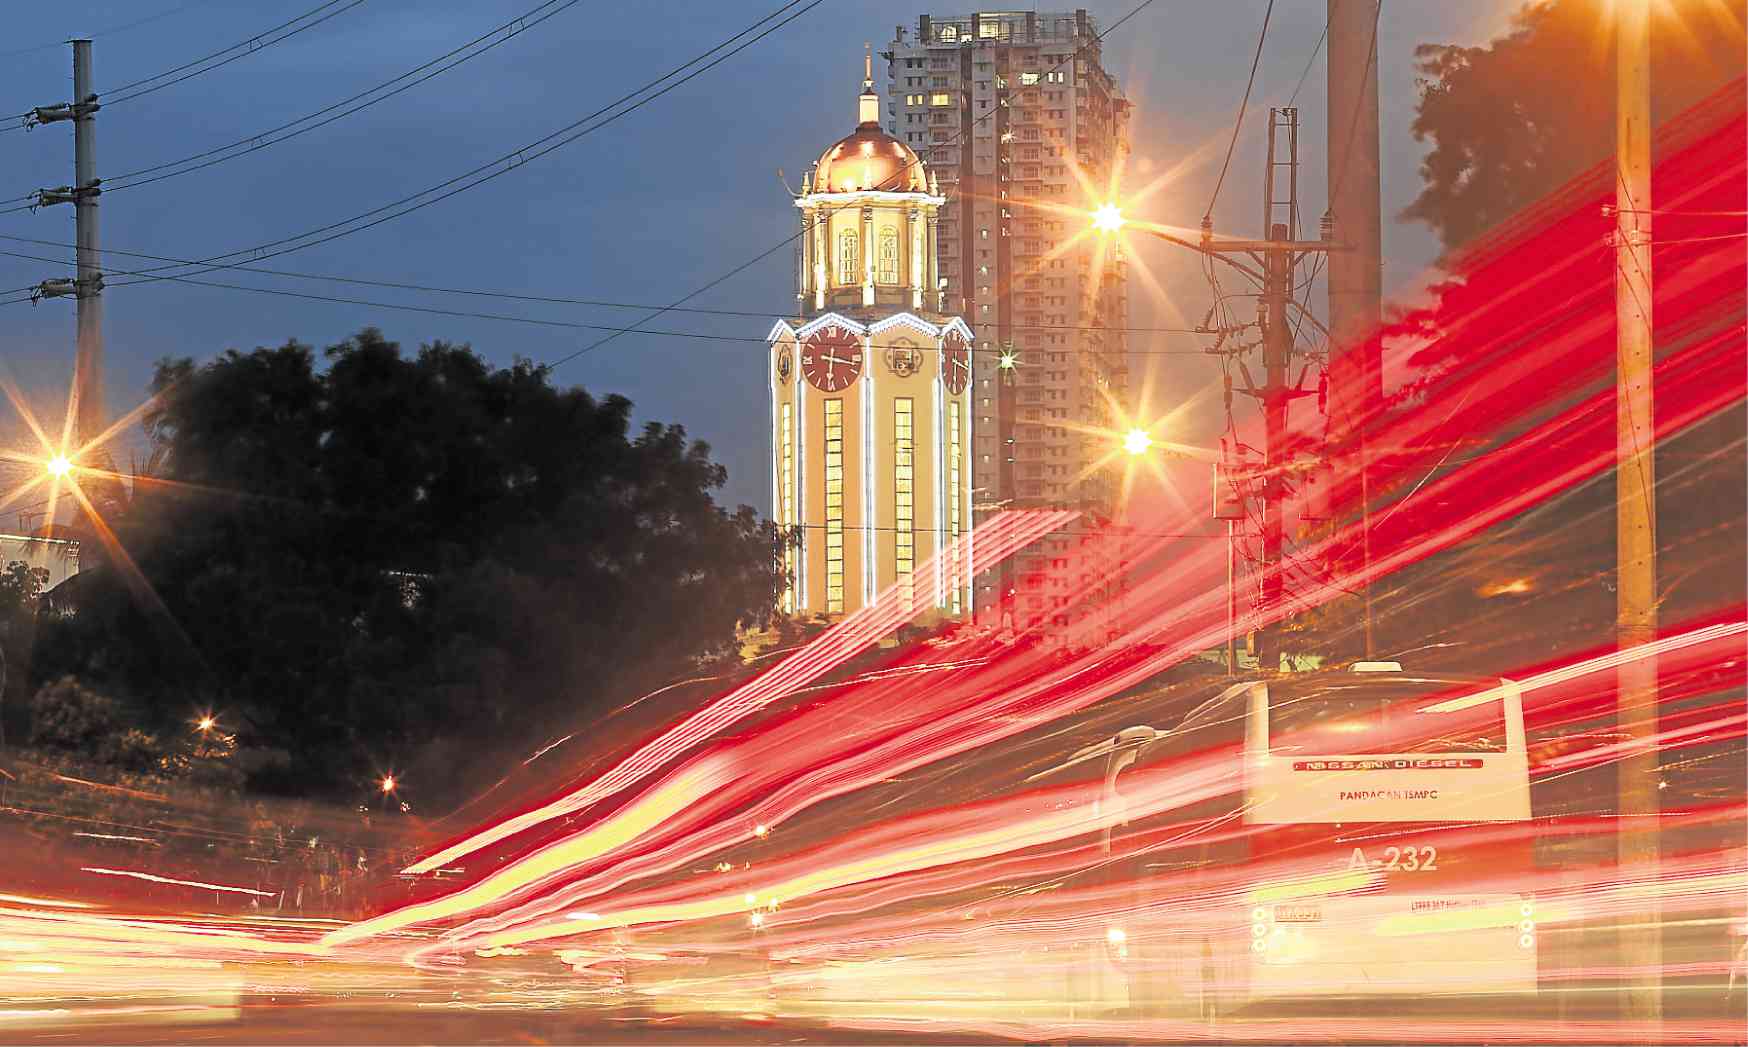 Will this city be like Hanoi Grand Prix Formula 1 street circuit? | Inquirer.net